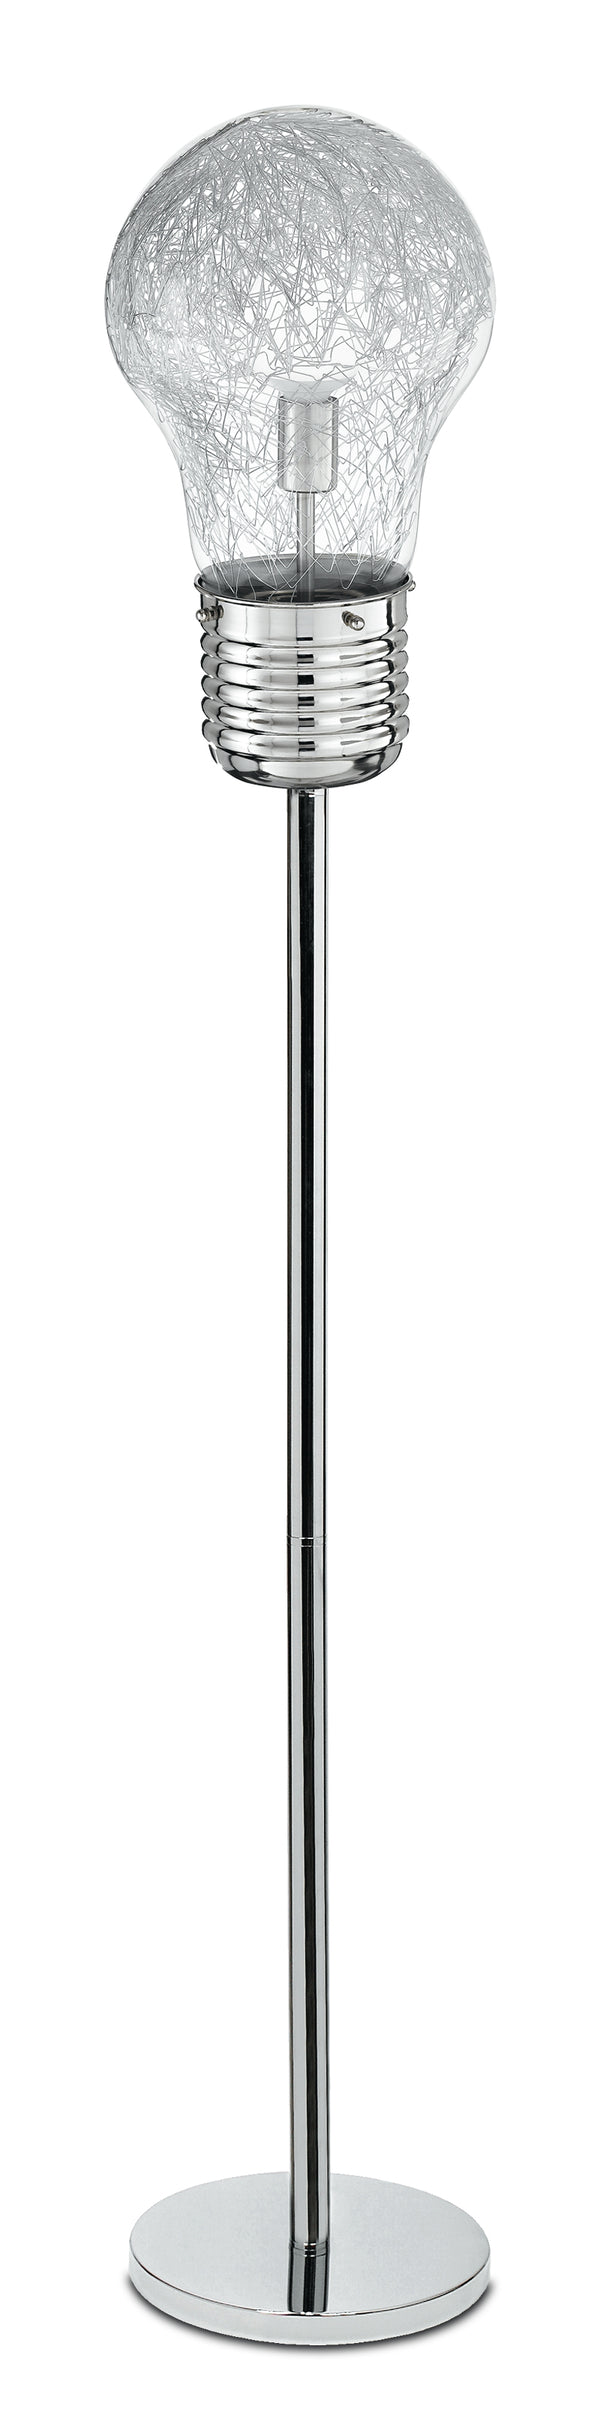 Stehlampe Geflochtene Aluminiumdrähte Glaskolben Modern E27 Umwelt I-LAMPD / PIANT online